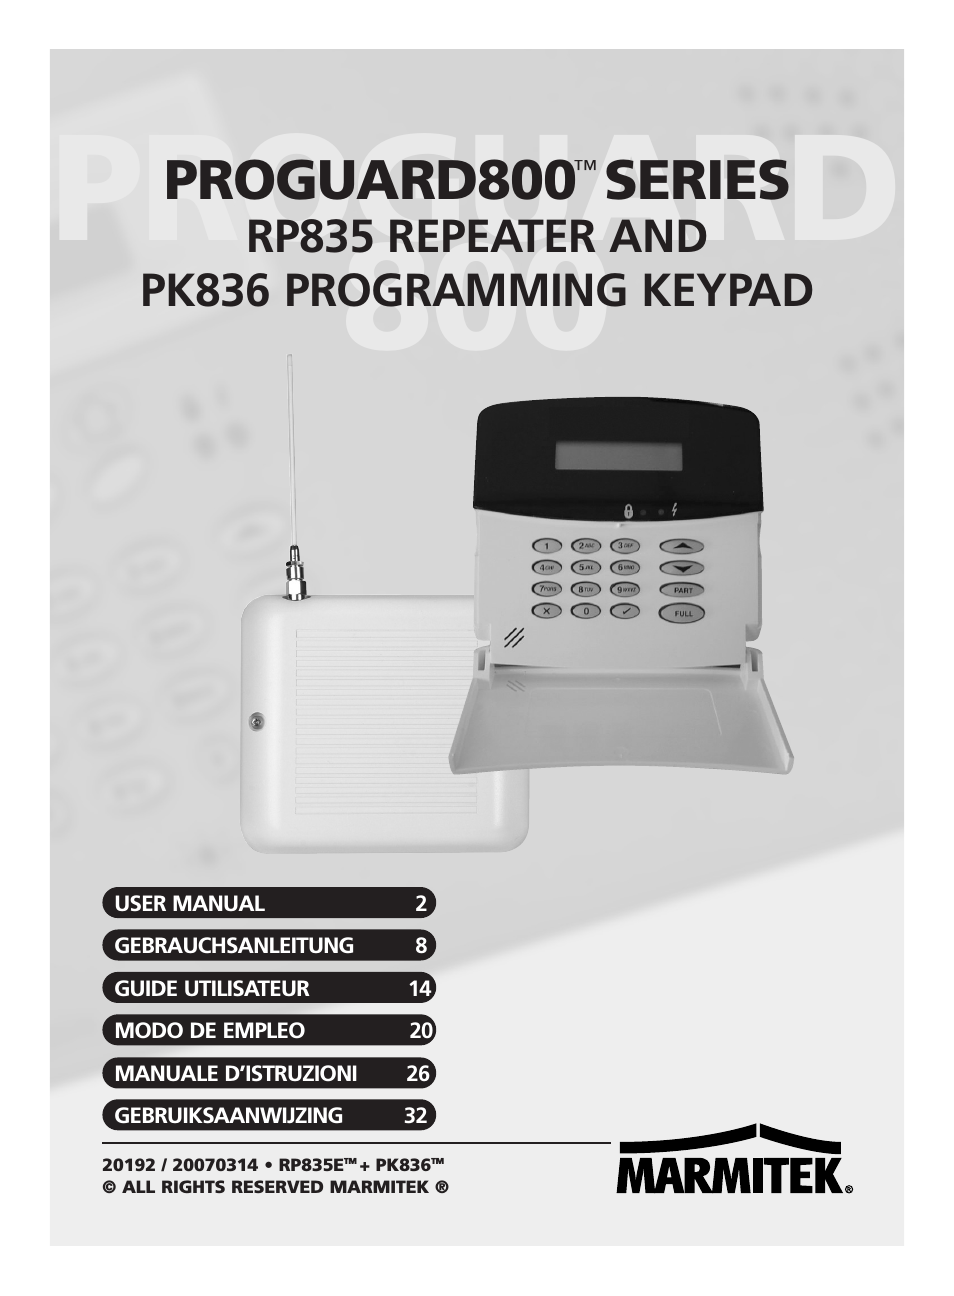 PROGUARD800 Series RP835